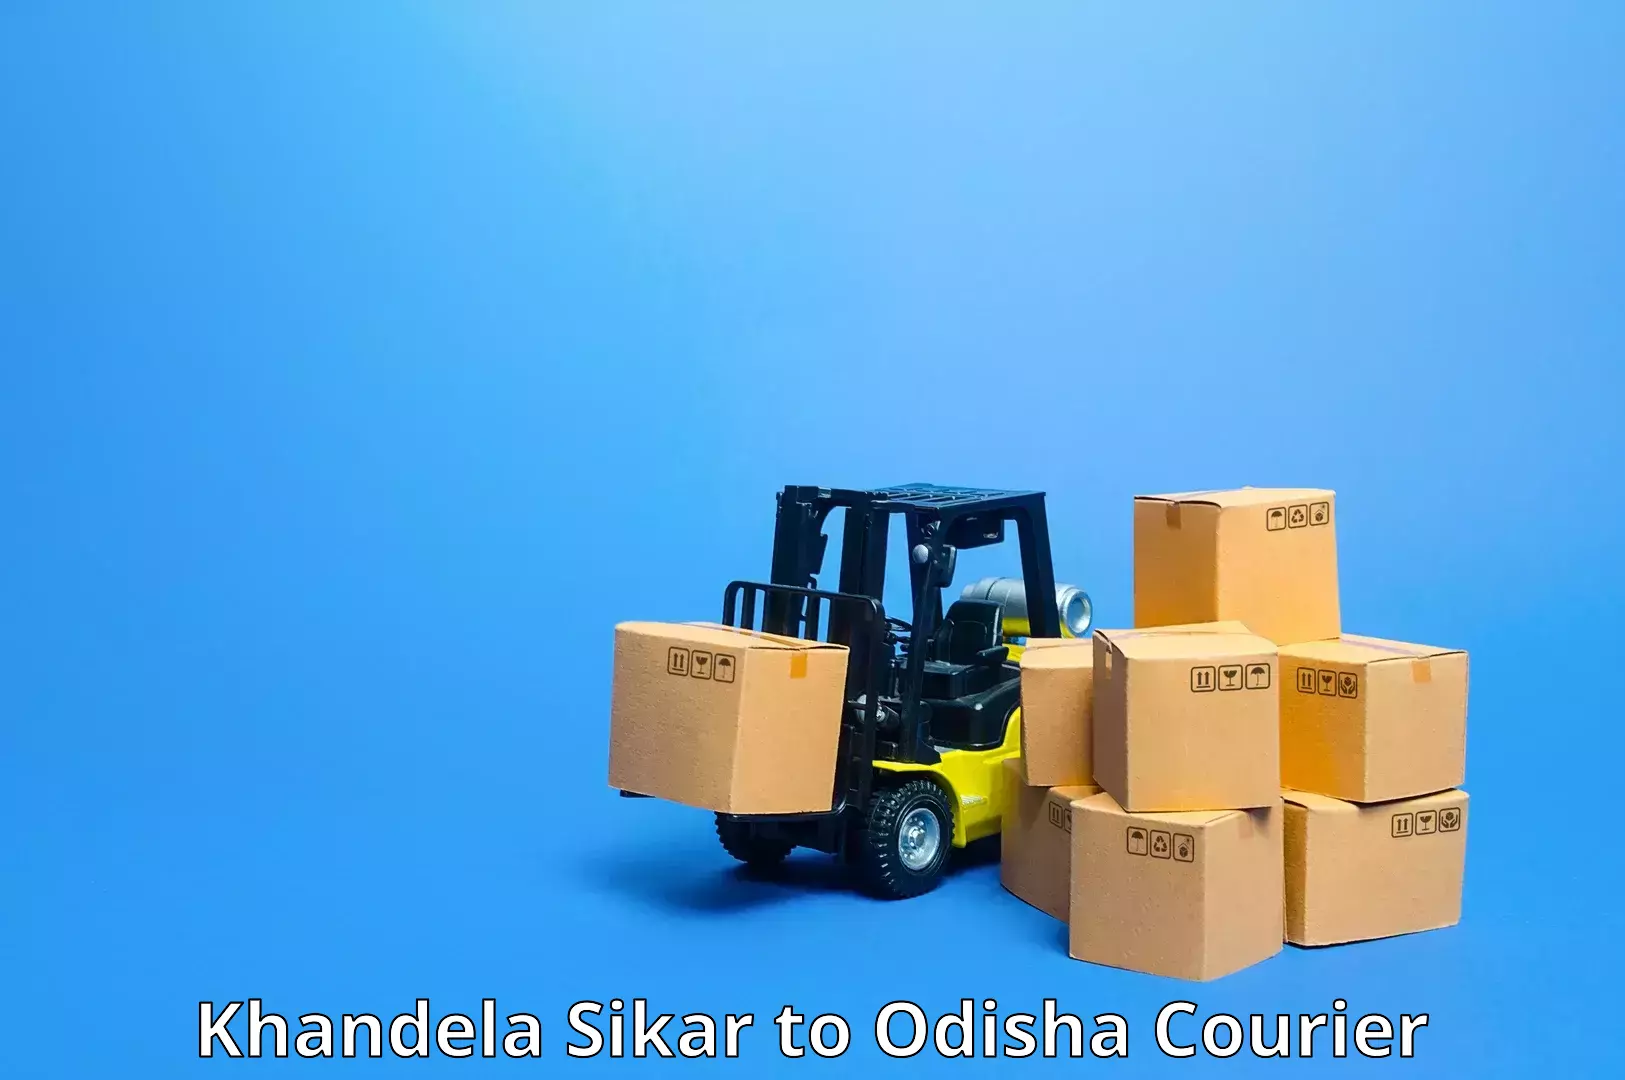 Budget-friendly shipping Khandela Sikar to Odisha